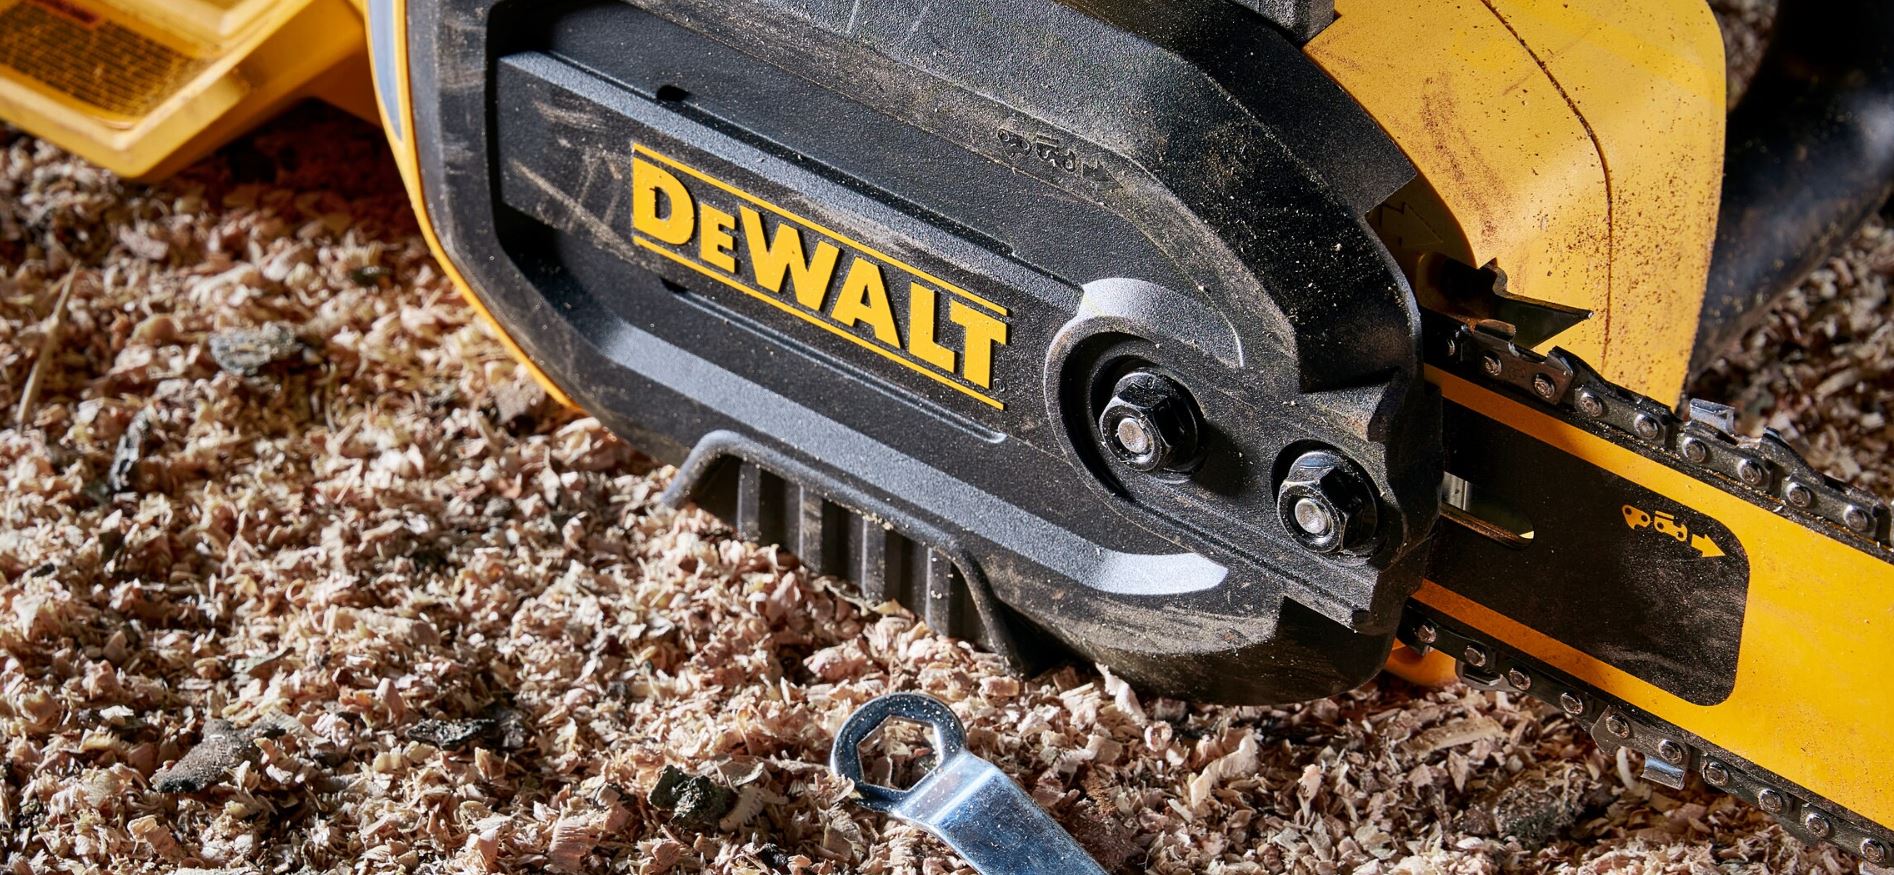 dewalt dwcs600 chainsaw recall